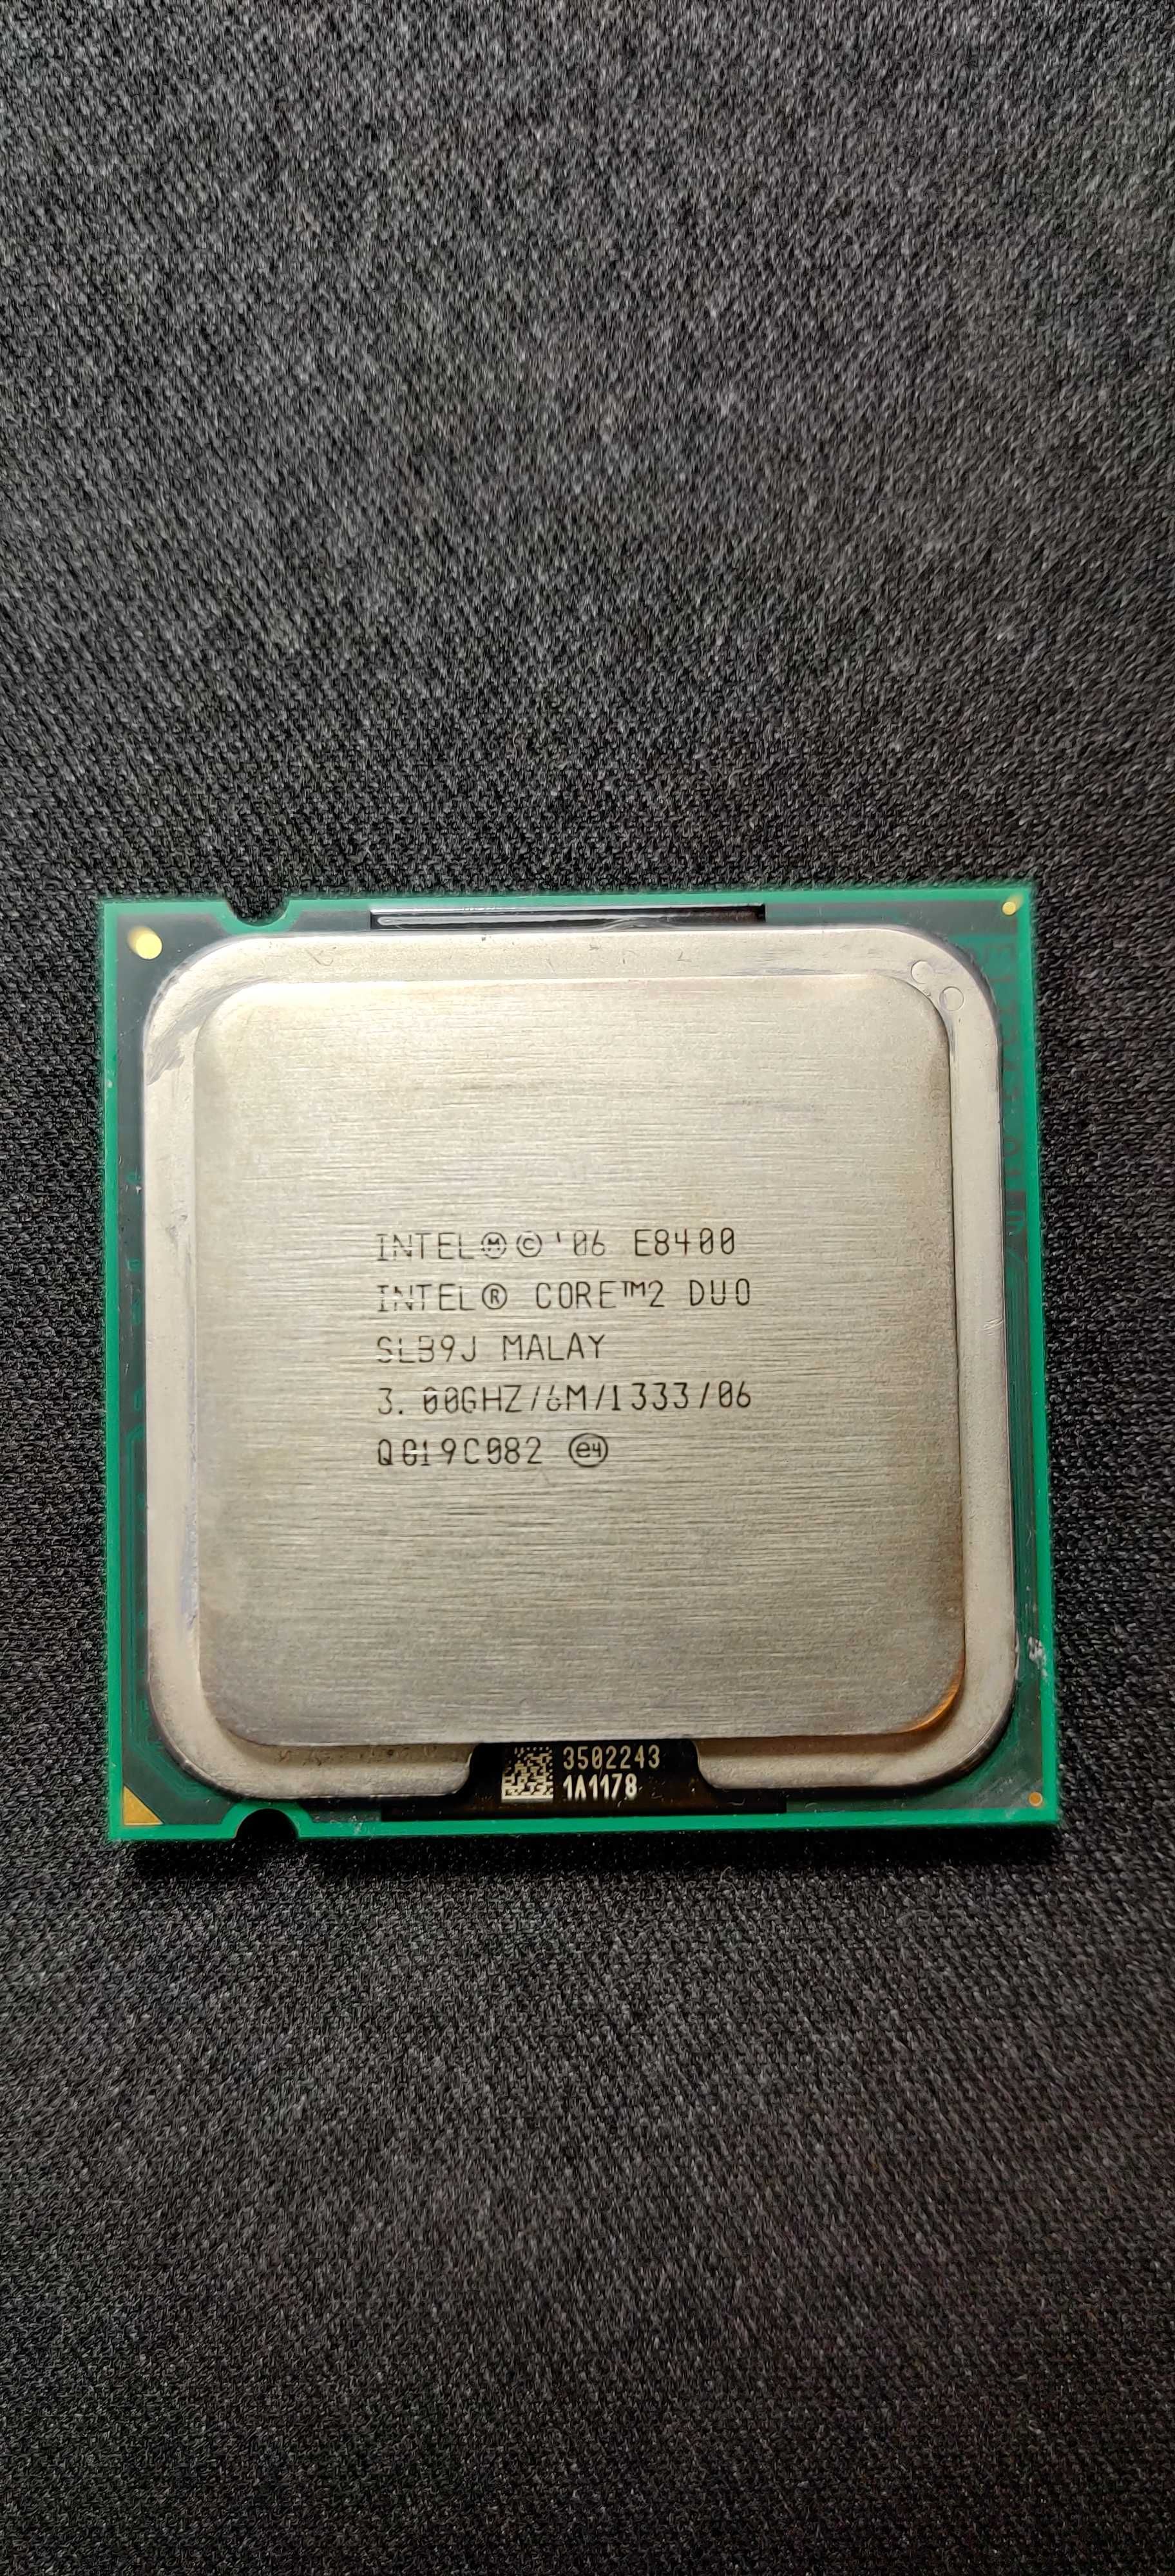 CPU Intel Core 2 DUO - E8400 - 3.00GHZ